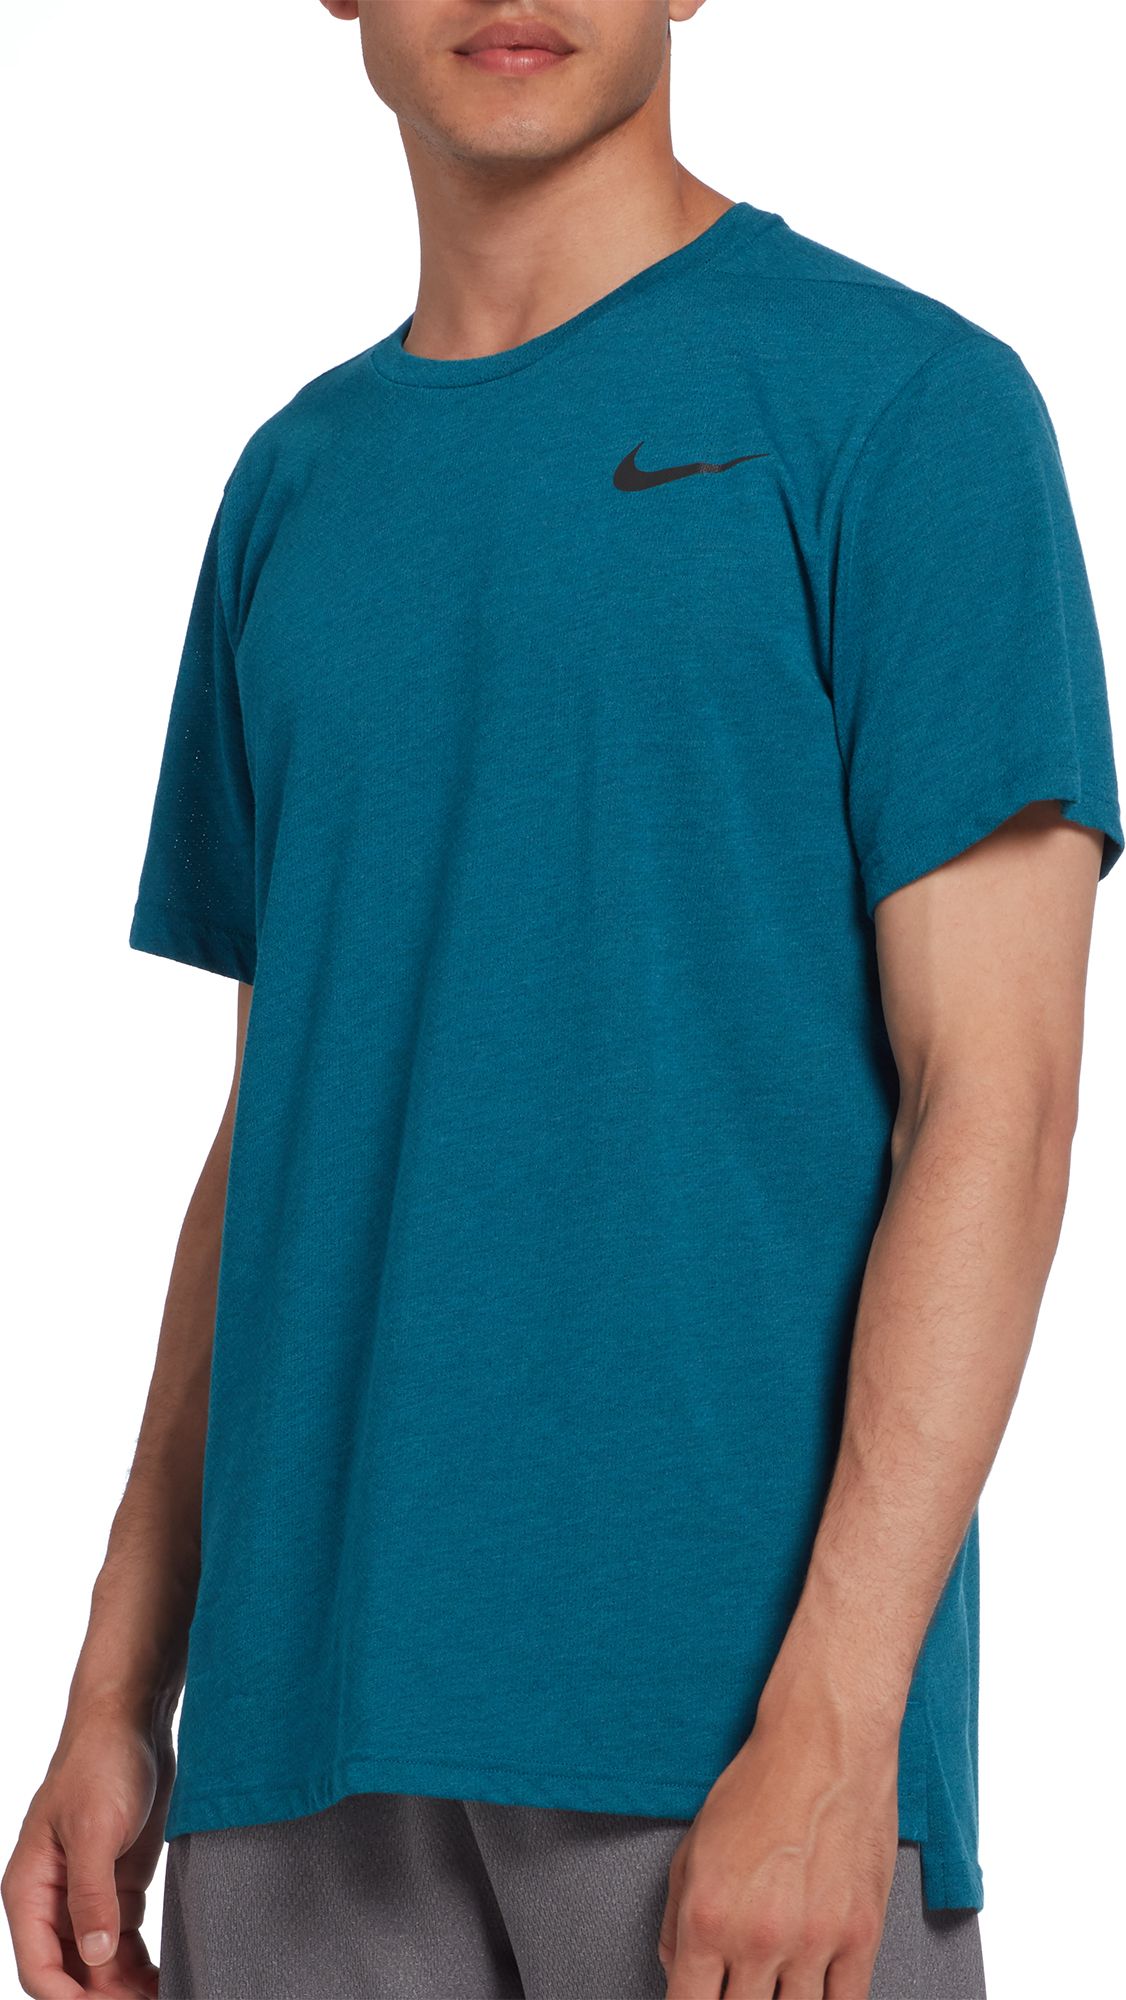 Nike Men's Hyper Dry T-Shirt (Regular and Big & Tall) - .97 - .97